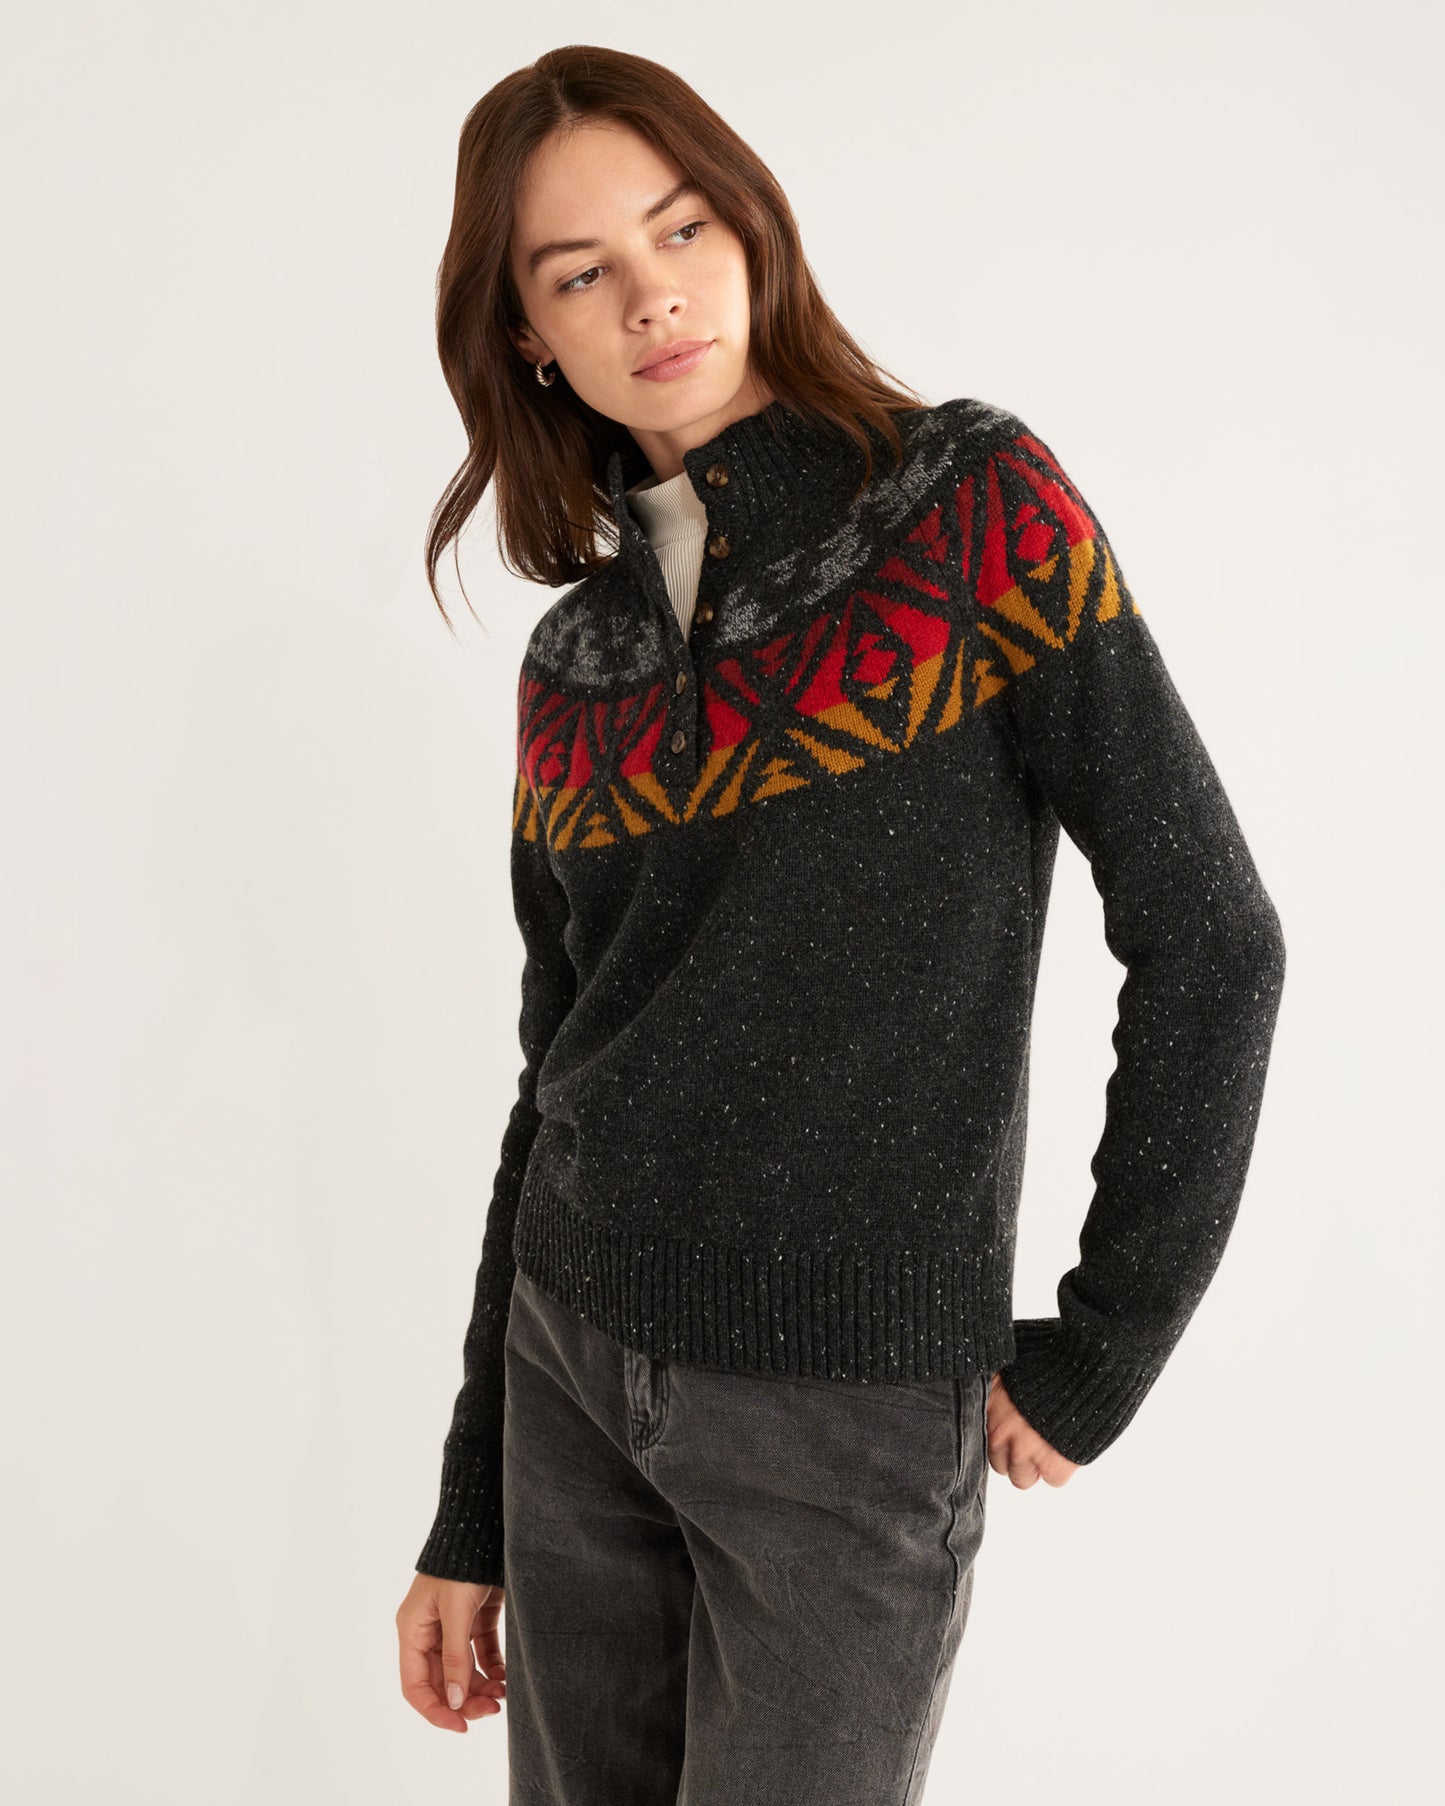 Pendleton Fairisle Mock-Neck Sweater in Charcoal